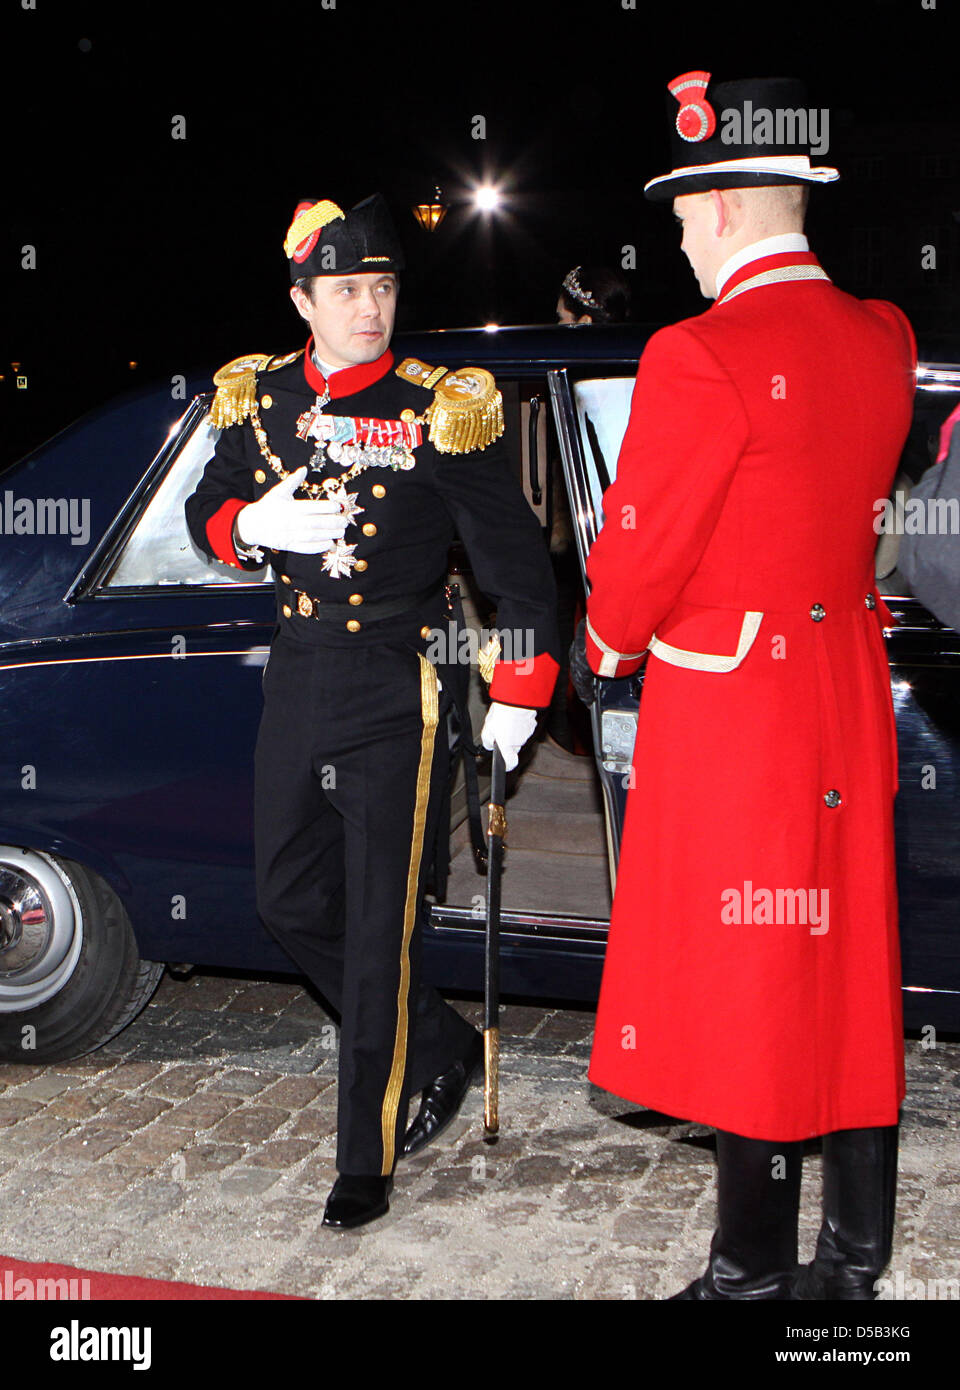 crown-prince-frederik-of-denmark-l-in-uniform-arrives-for-the-traditional-D5B3KG.jpg